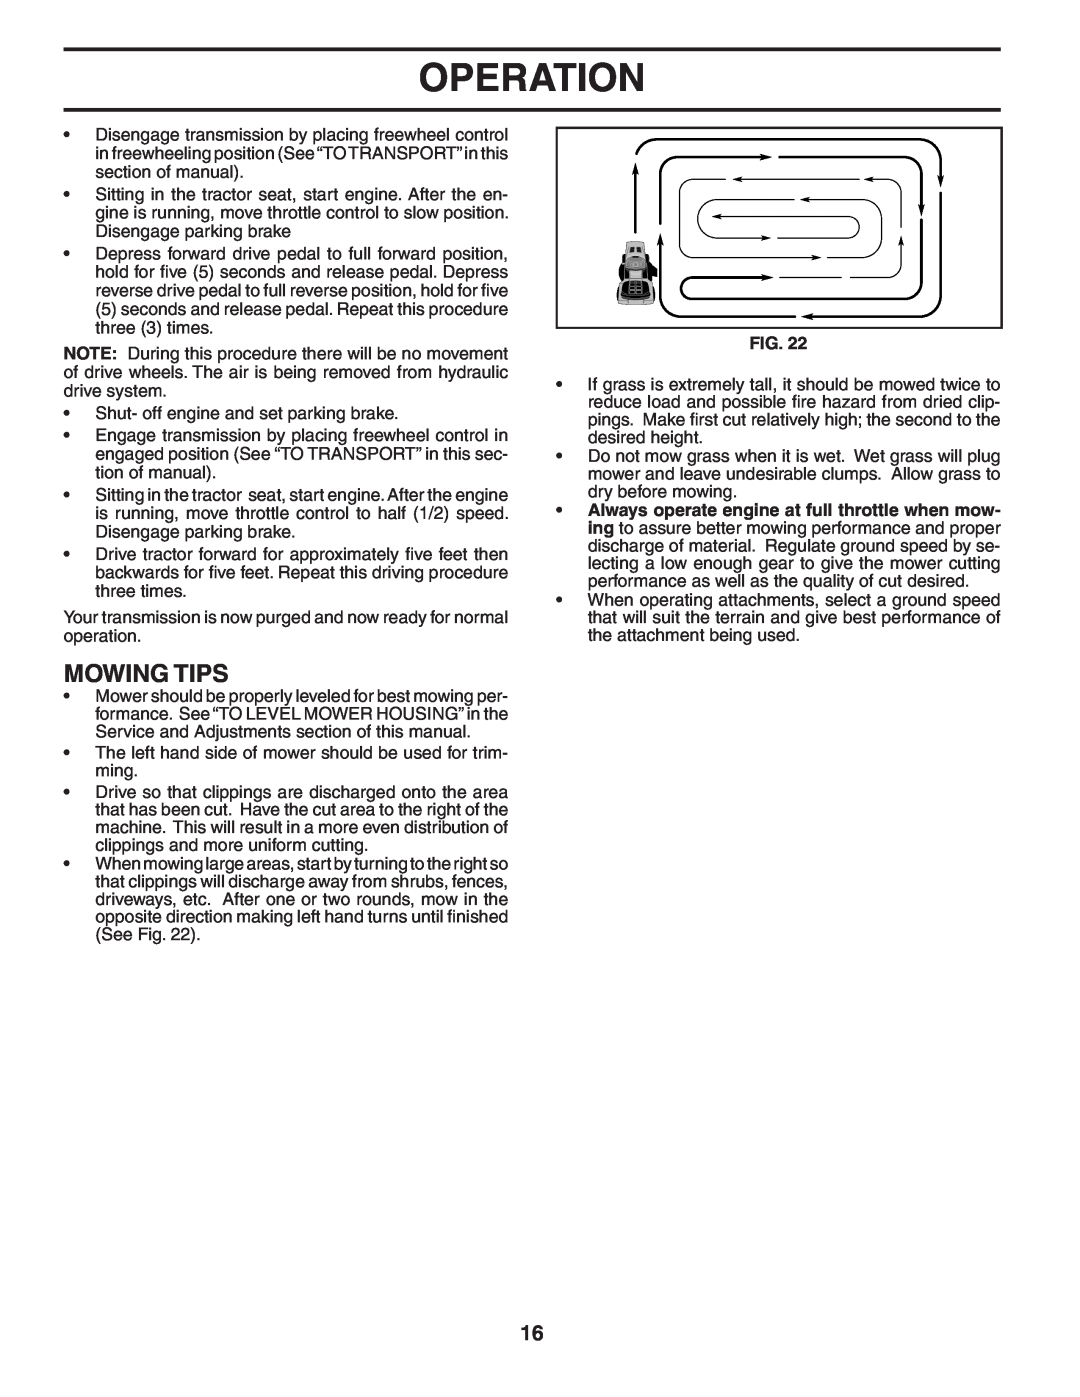 Poulan 402495 manual Mowing Tips, Operation 